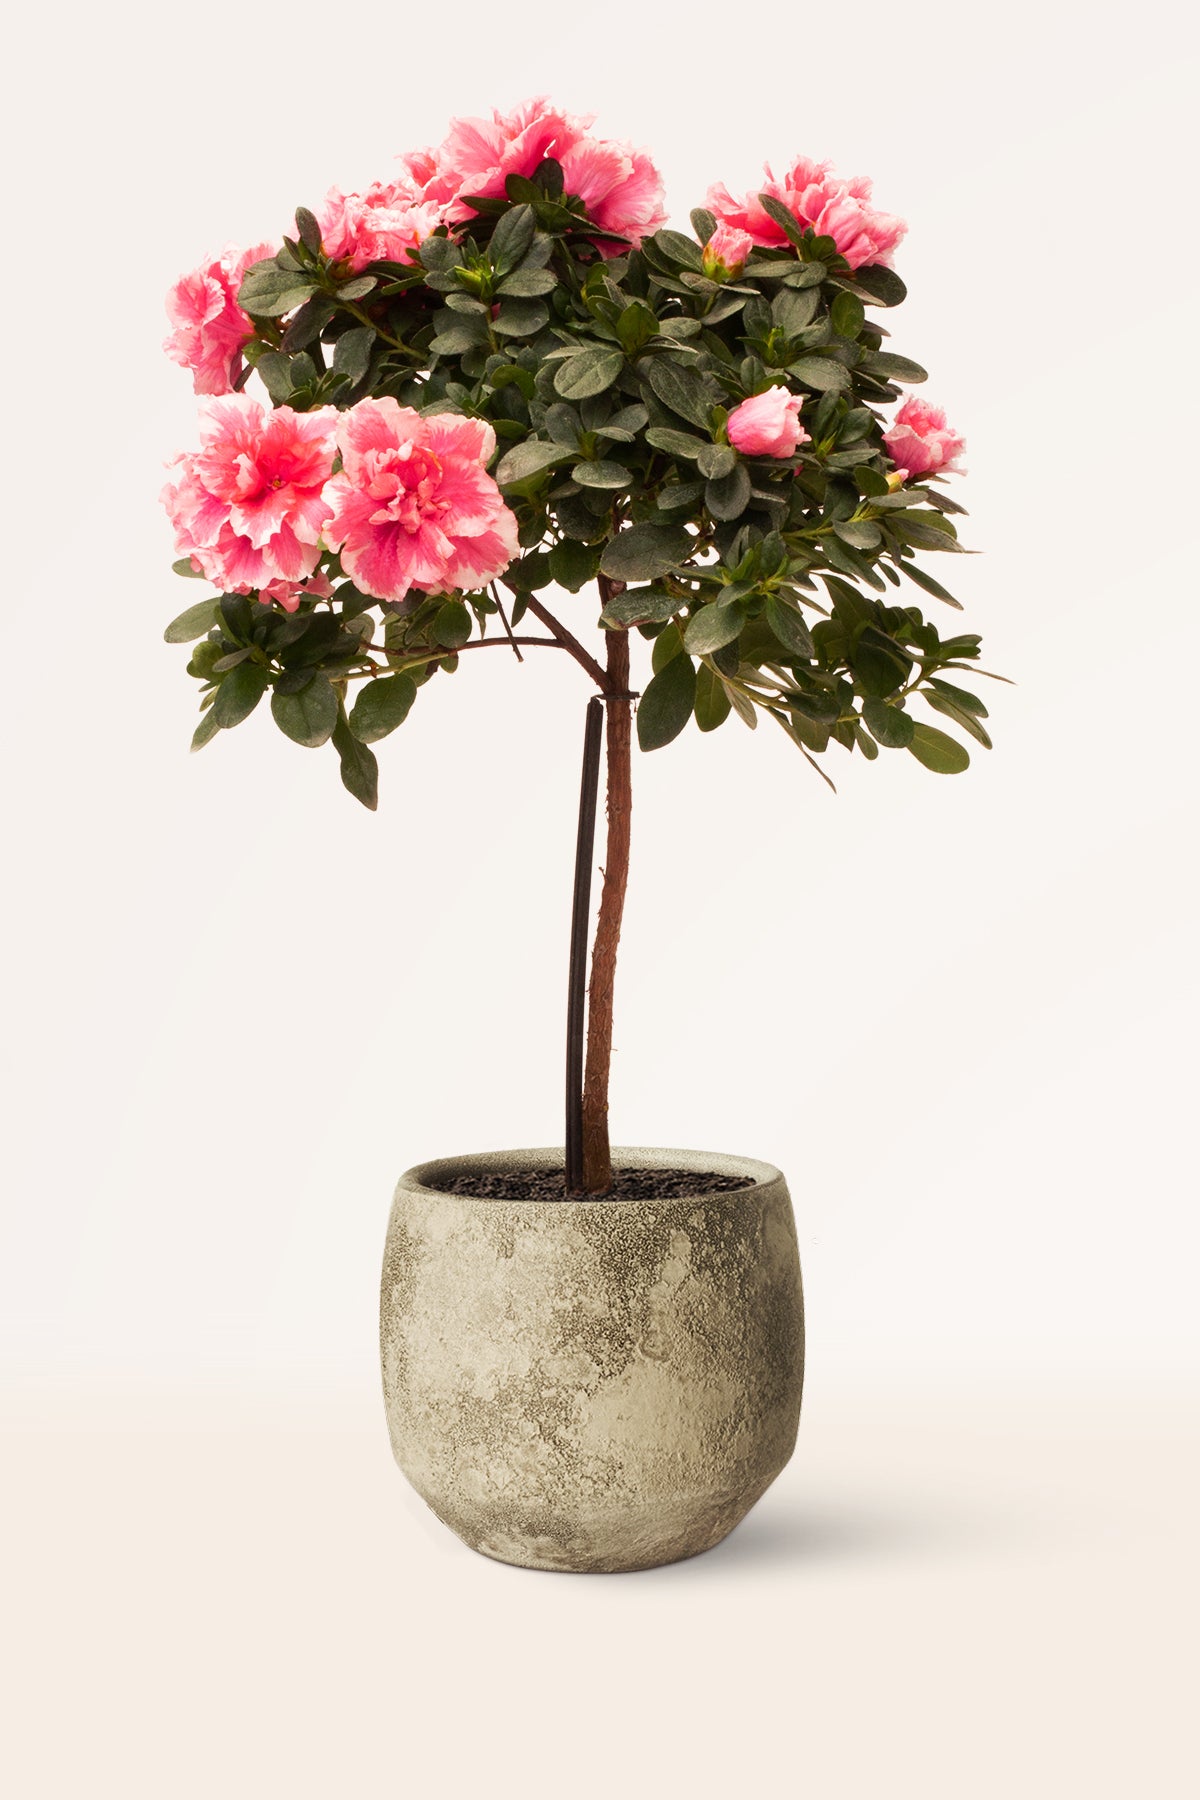 Comprar Azalea Roja Copa (Rhododendron) online | April Plants | APRILPLANTS